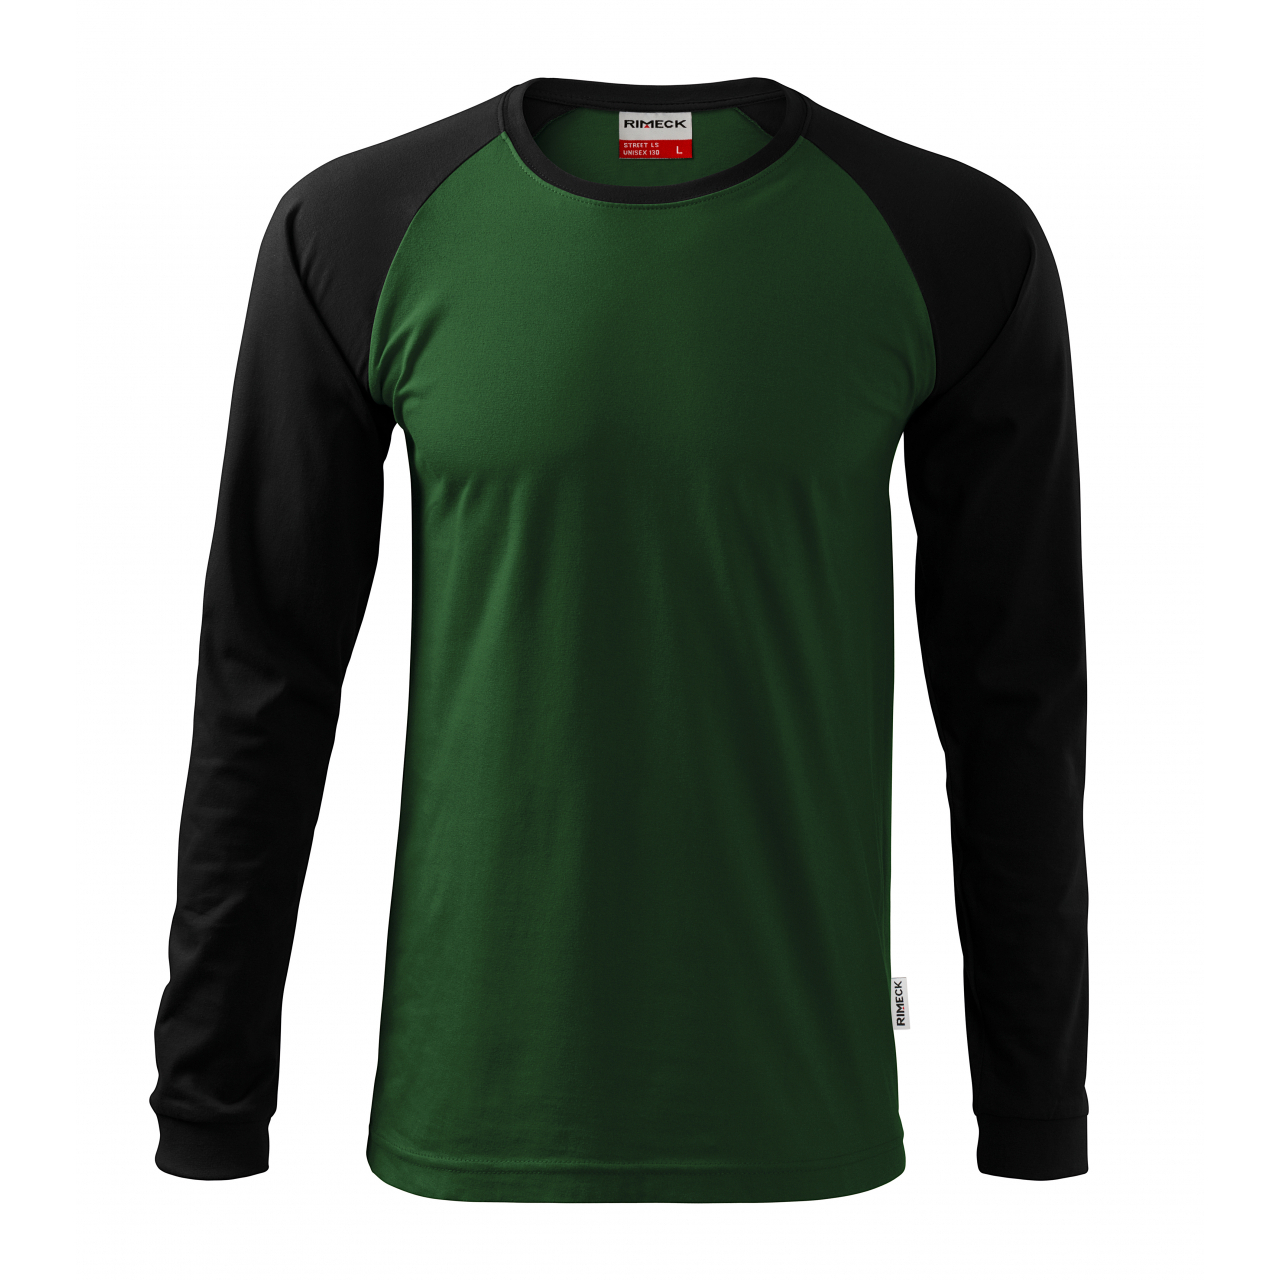 Tričko unisex Rimeck Street Long Sleeve - zelené-černé, XXL